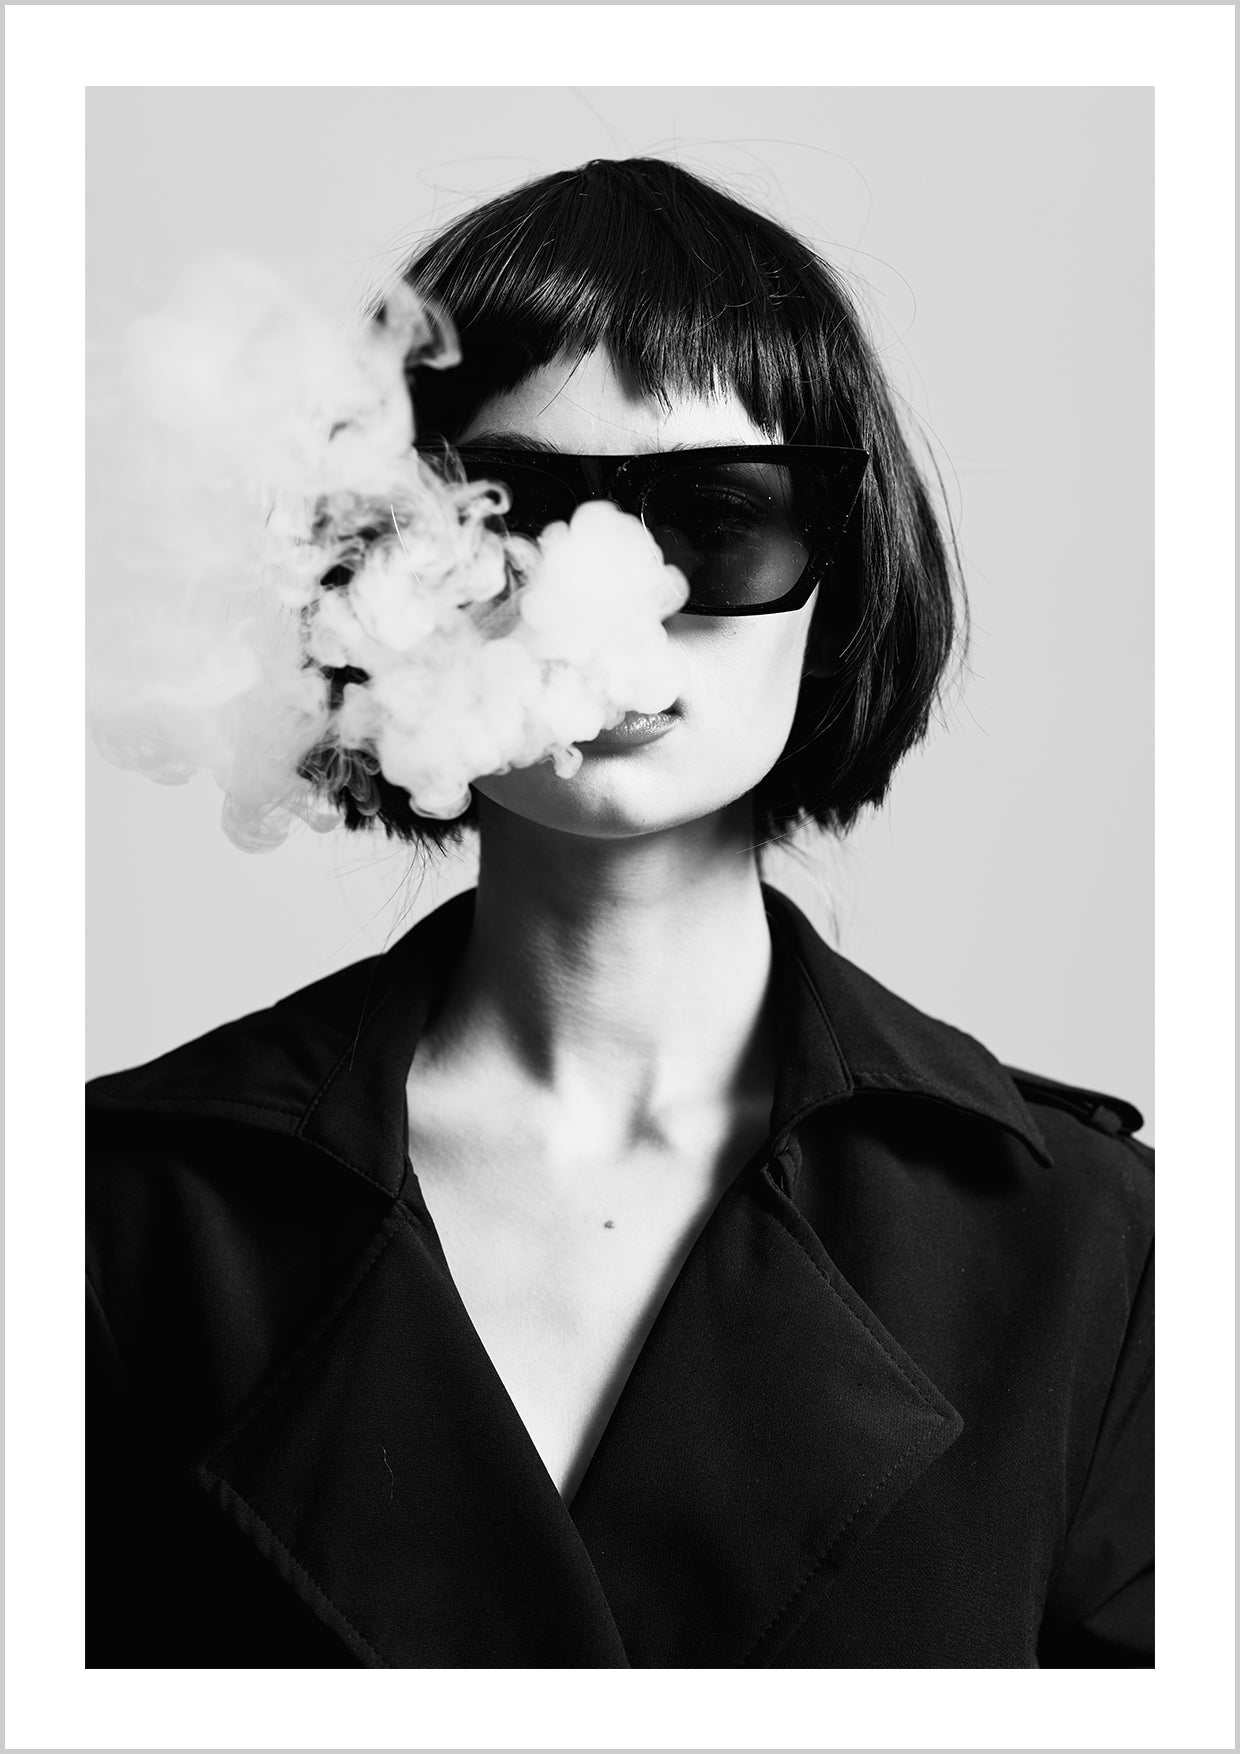 Smoking girl in black suit wearing sunglasses